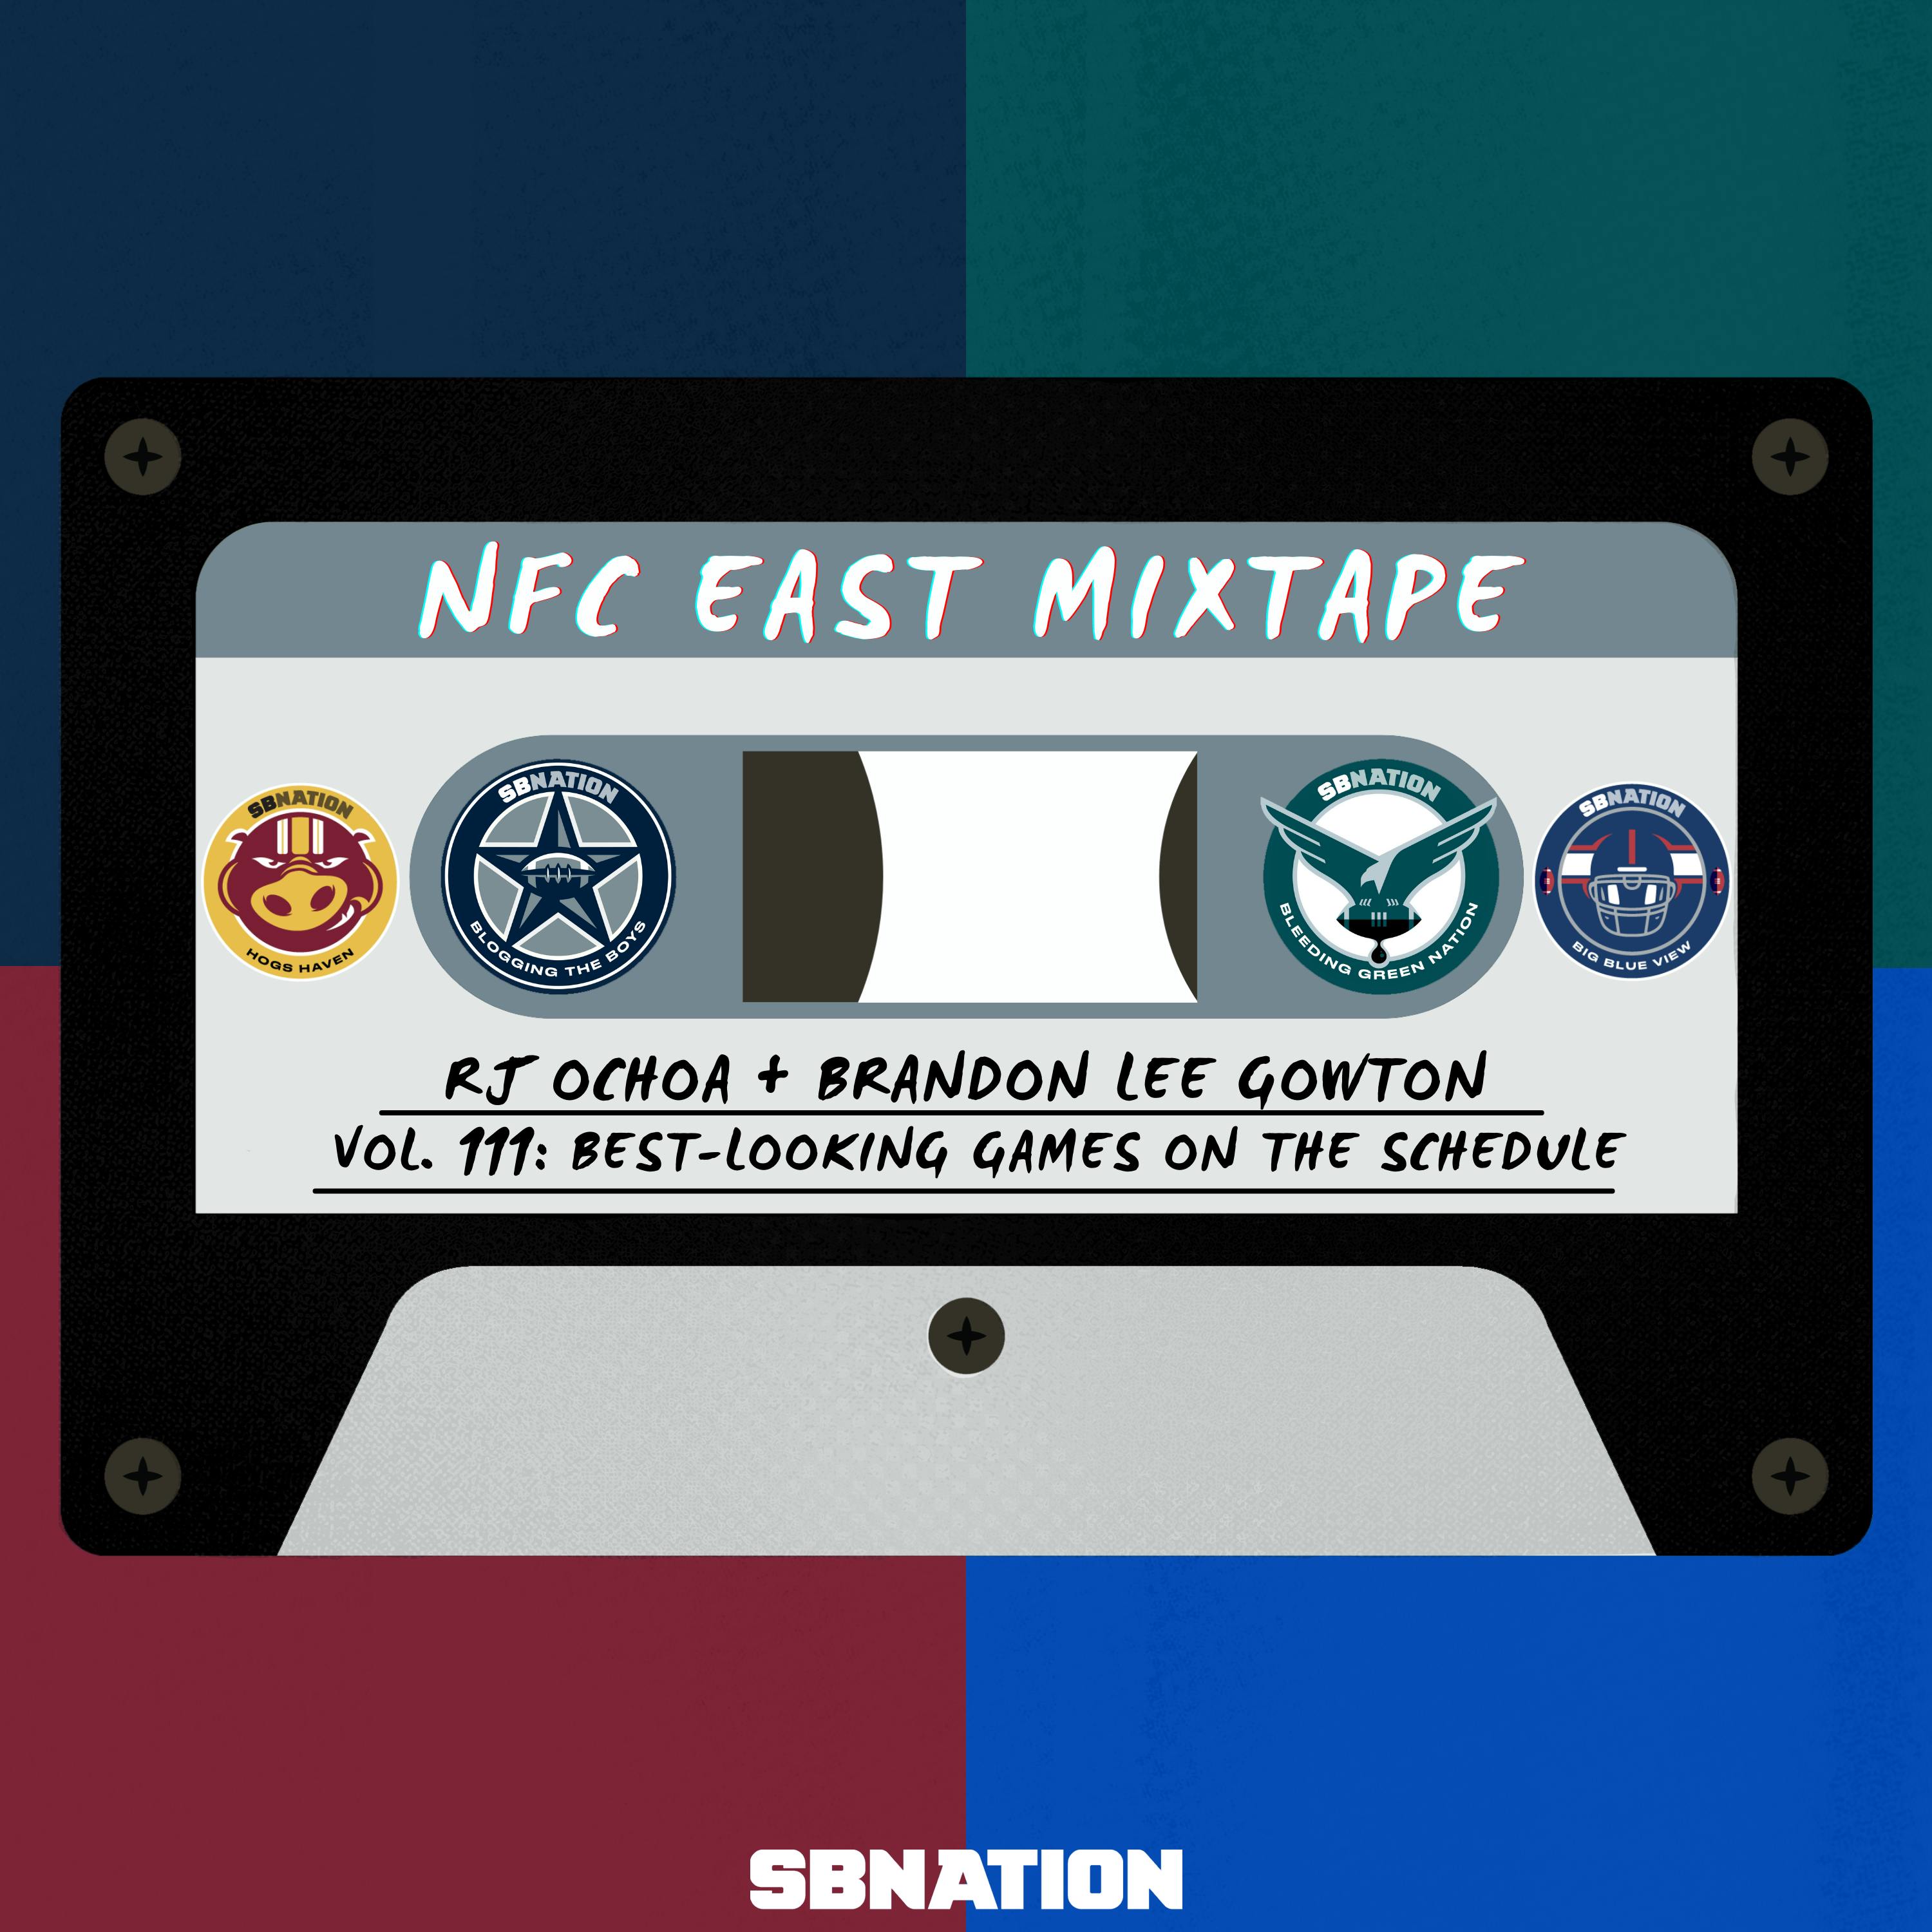 NFC East Mixtape Vol. 111: Best-looking games on the schedule